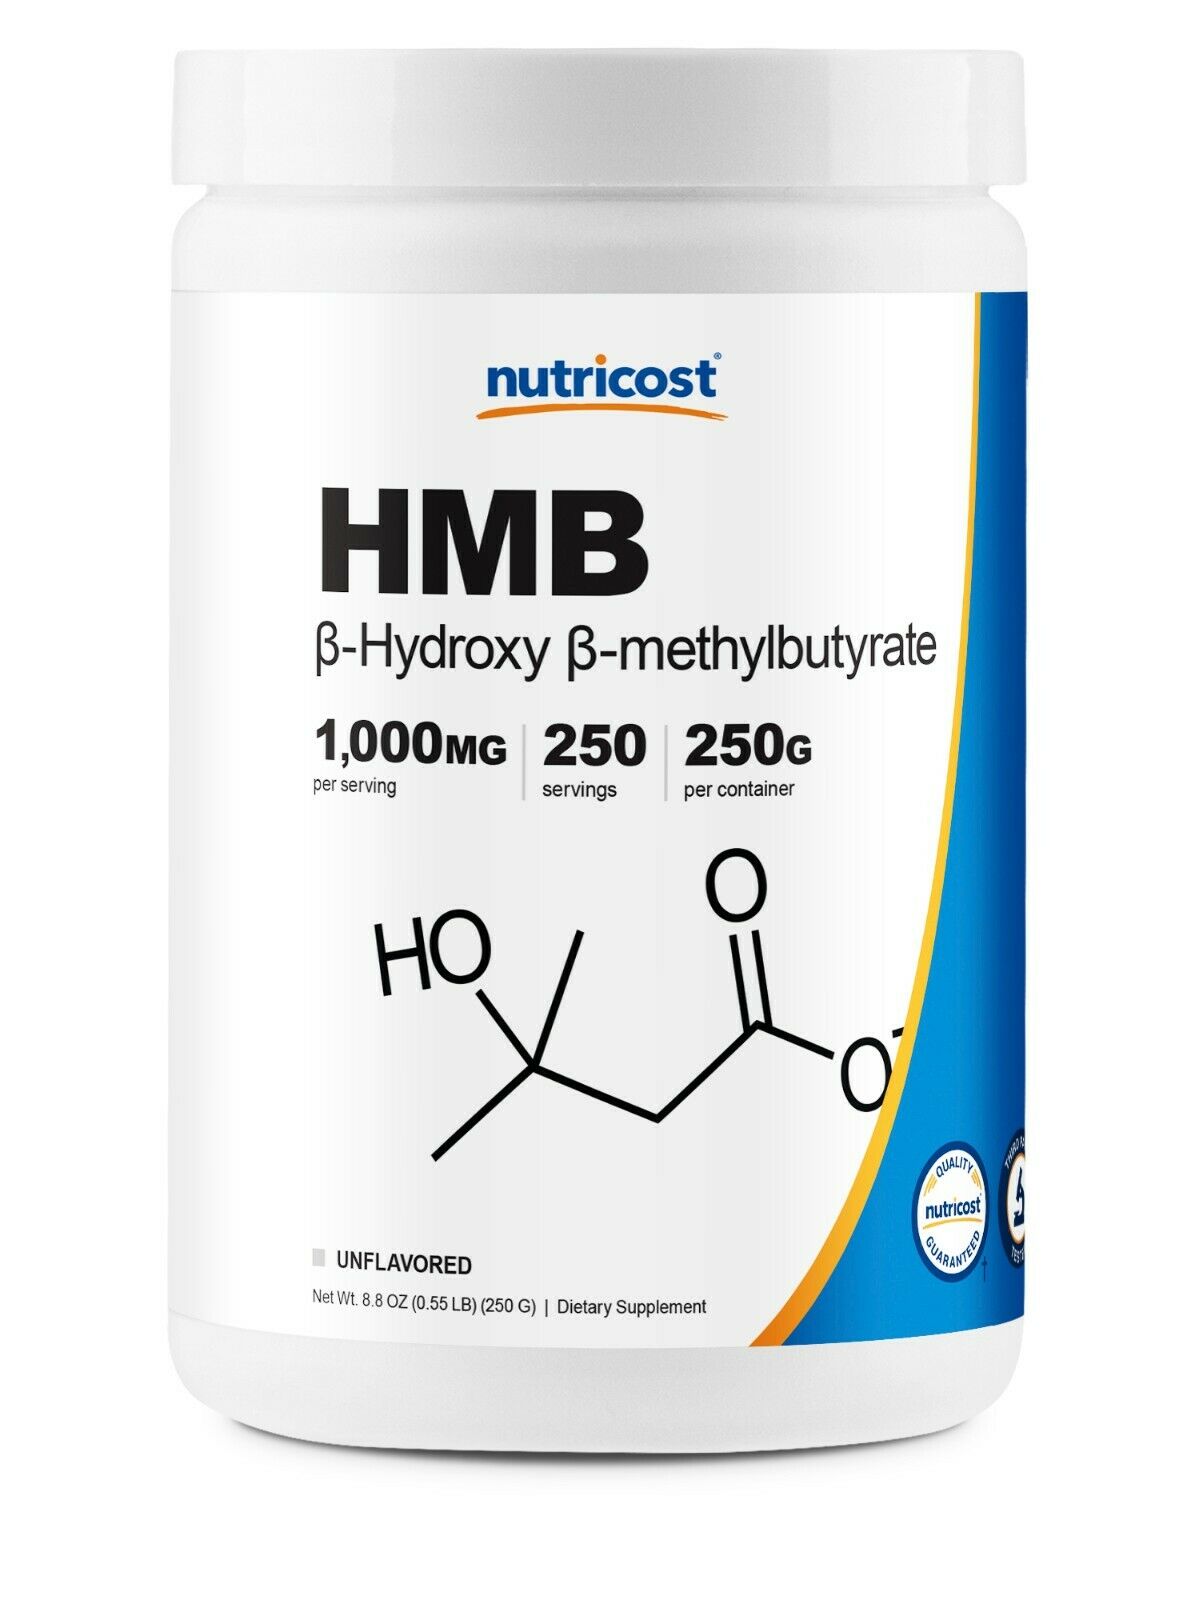 Nutricost Hmb Powder (beta-hydroxy Beta-methylbutyric) 250 Grams